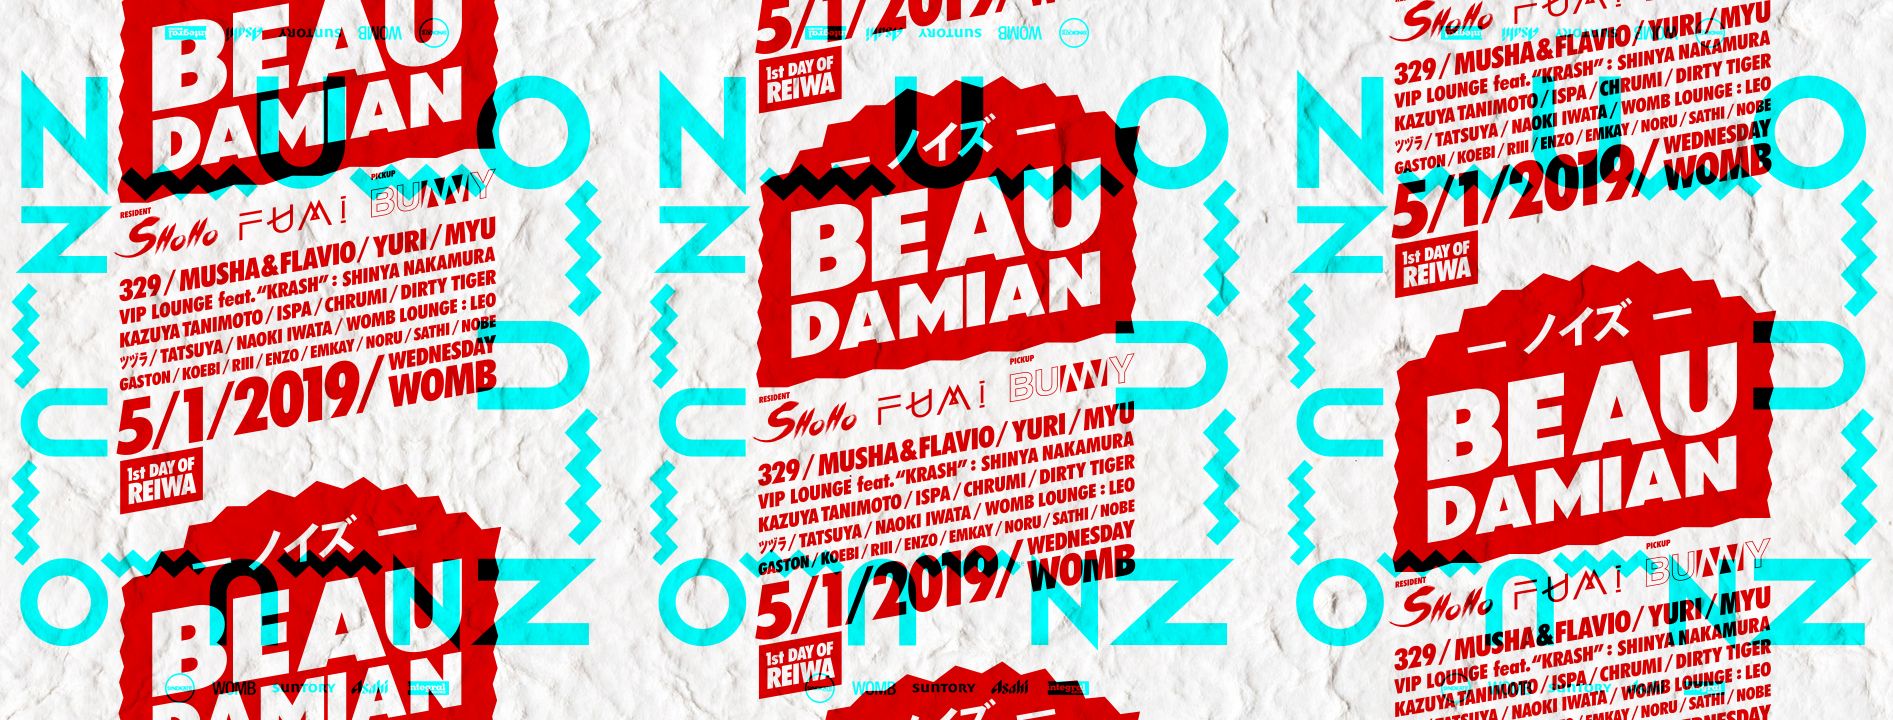 N_U_O presents BeauDamian